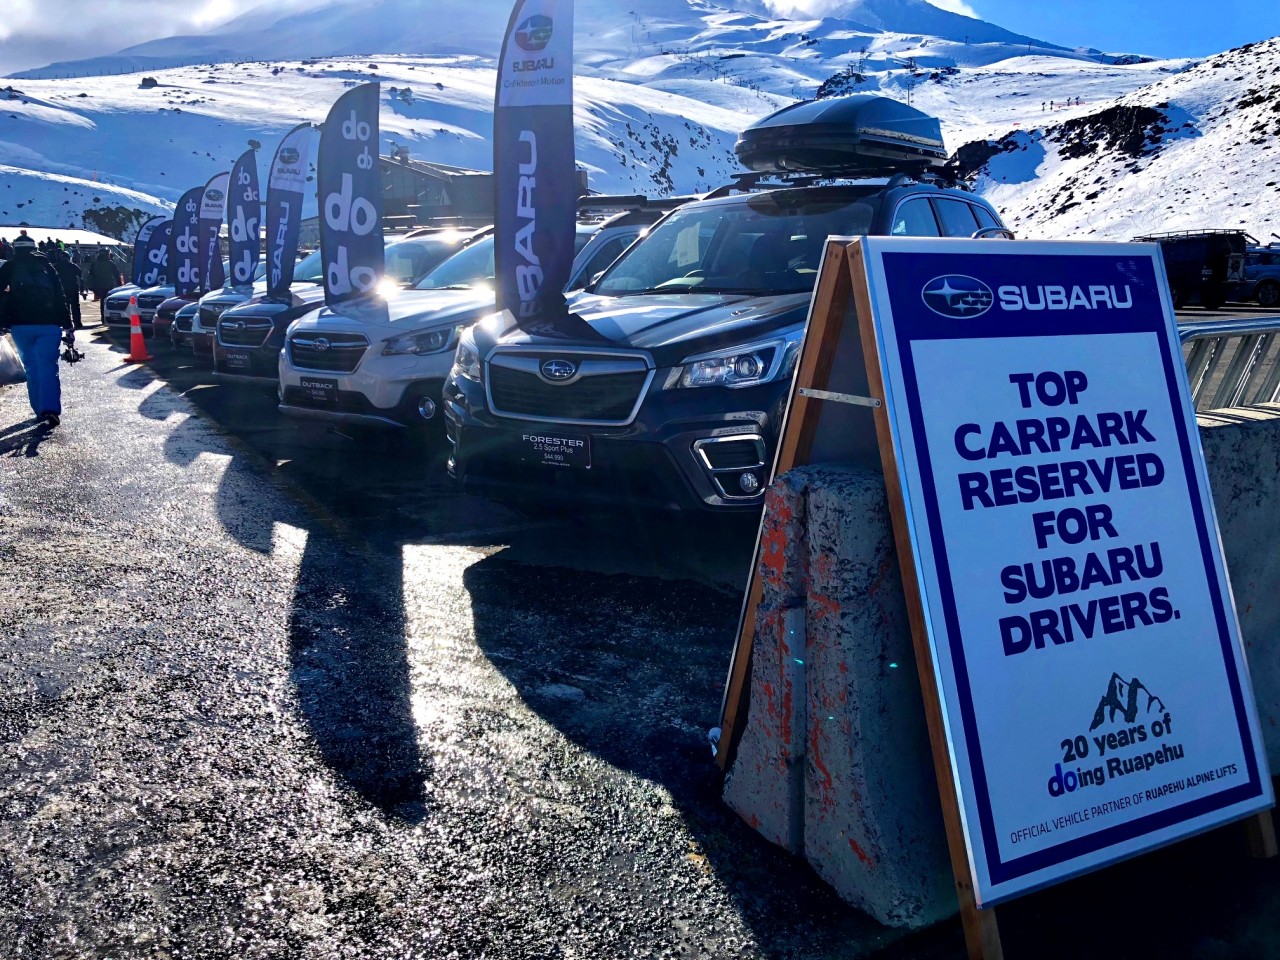 Subaru and Ruapehu Alpine Lifts celebrate a season of milestones